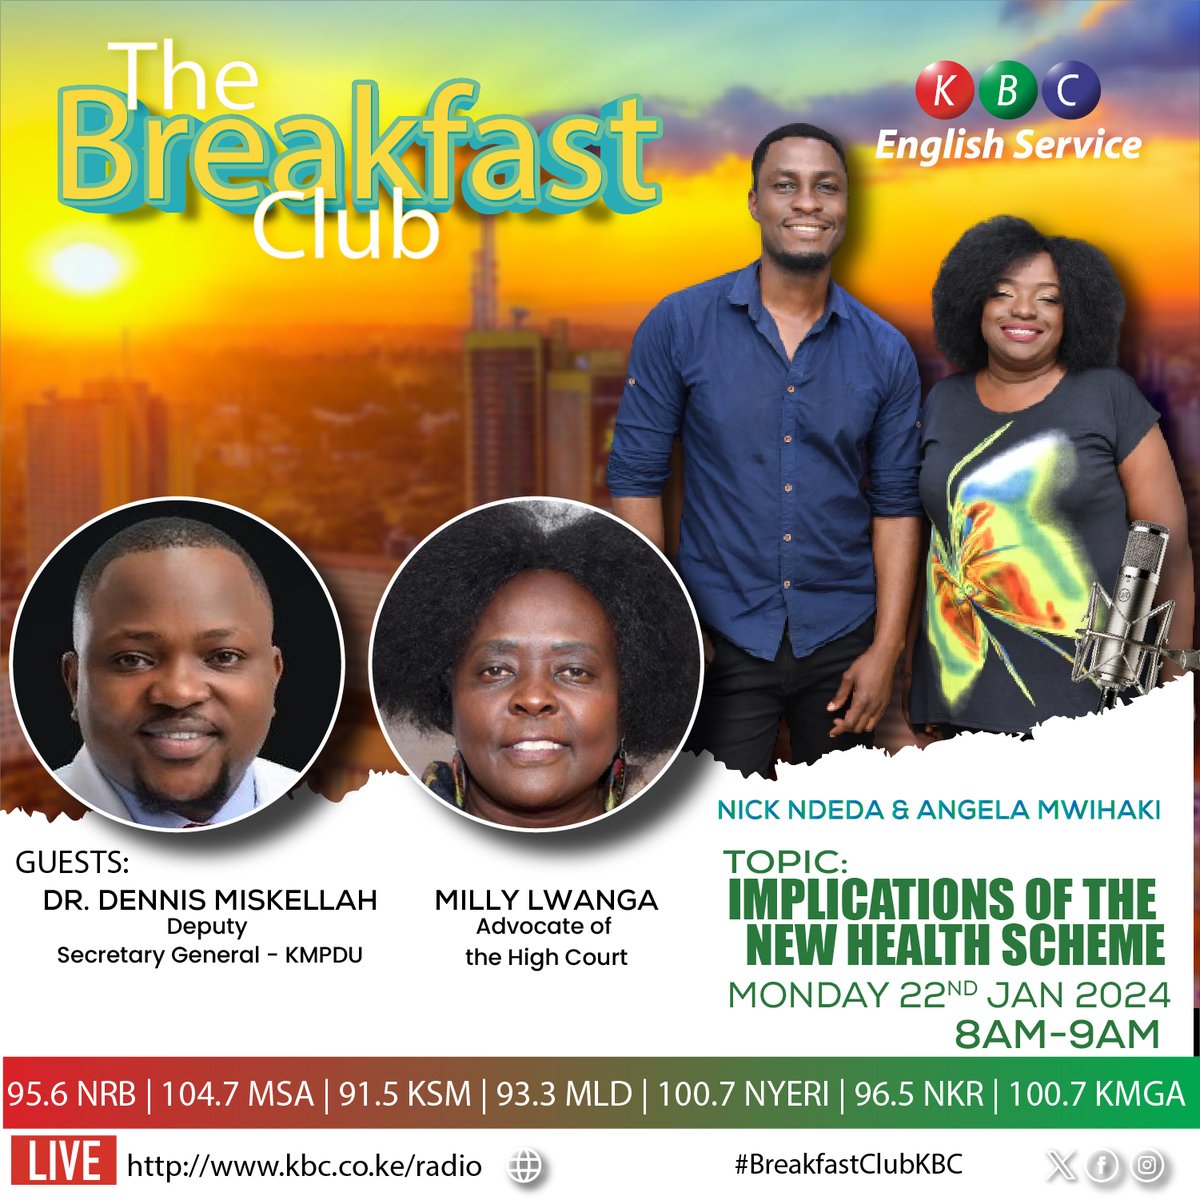 We start the week on the Breakfast Club from 0500HRS to 1000HRS with Nick Ndeda & Angela Mwihaki GOOD MORNING! Listen live: kbc.co.ke/radio/ ^PMN #BreakfastClubKBC @nick_ndeda | @angelamwihaki